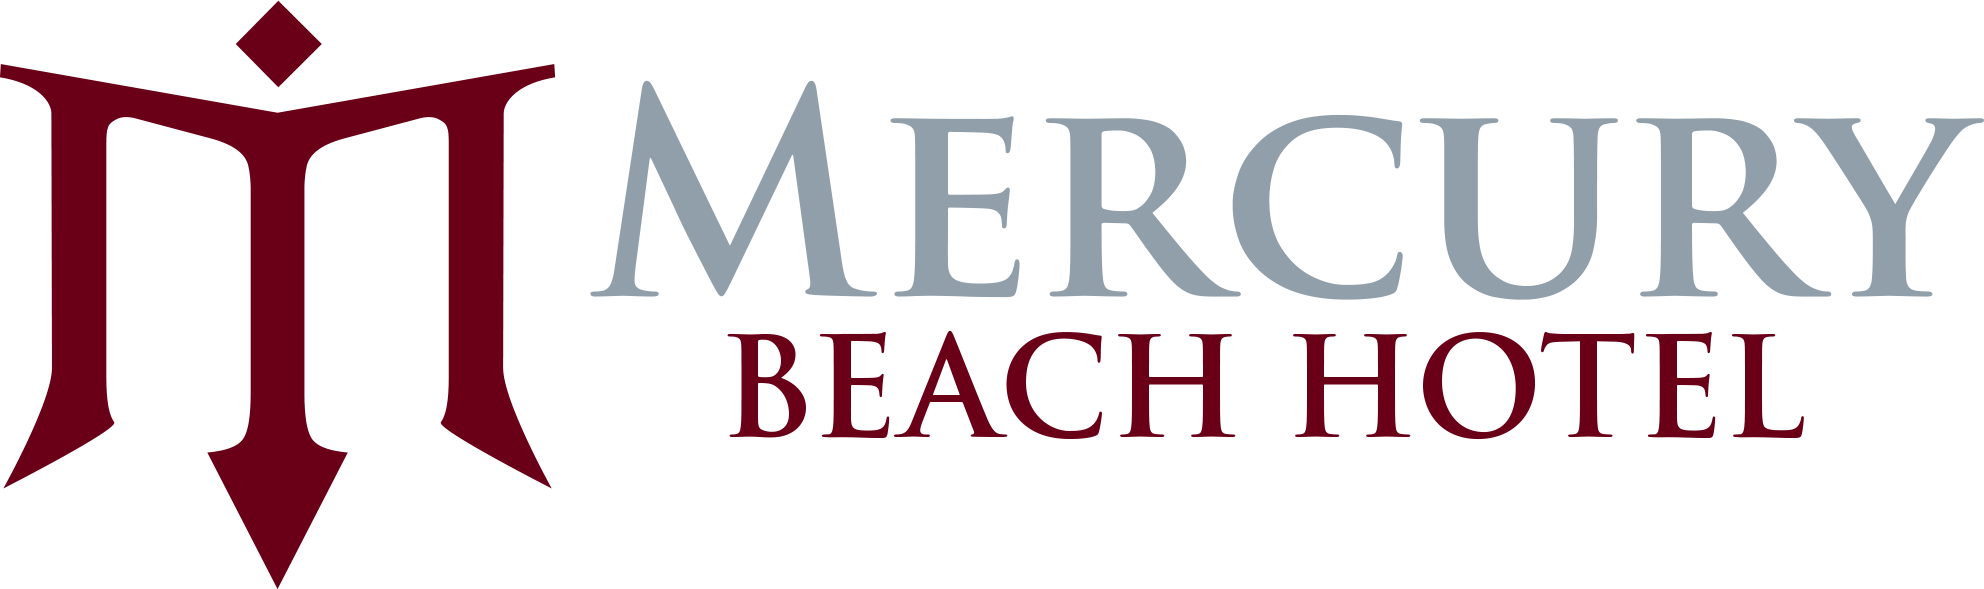 Mercury Beach Hotel